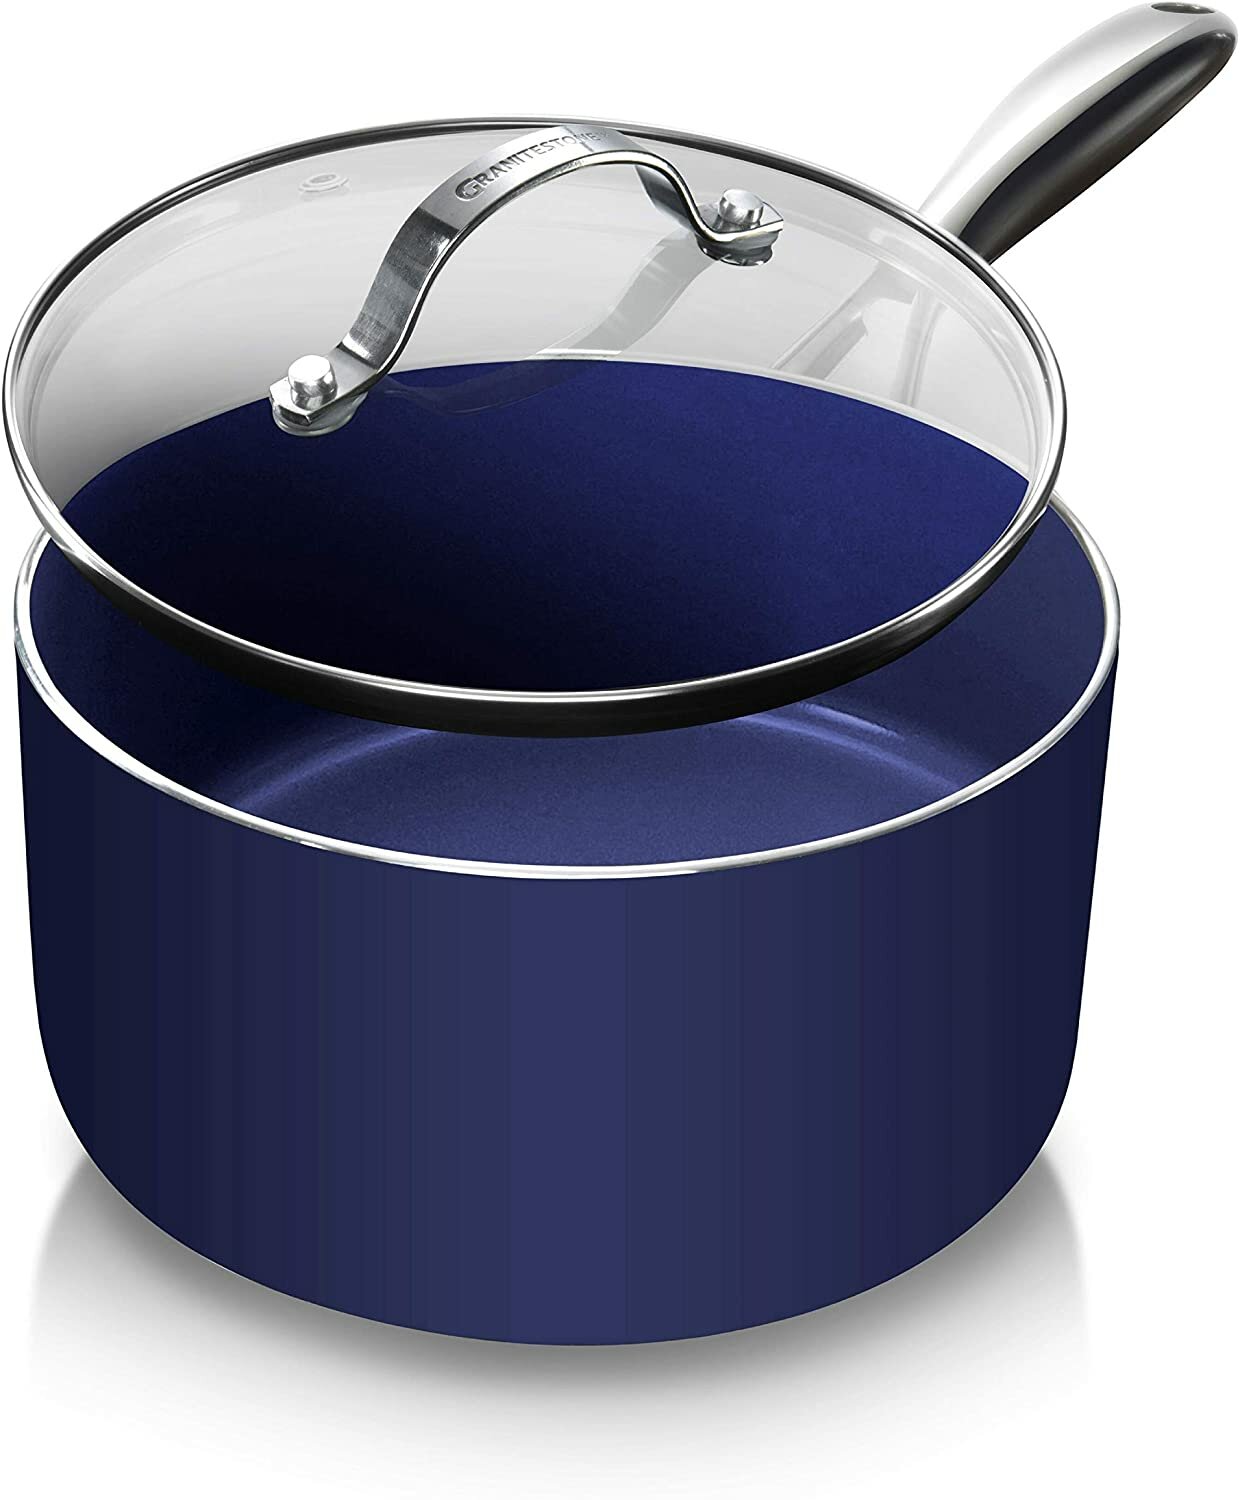 Granitestone 10.5 inch Grill Pan, Blue